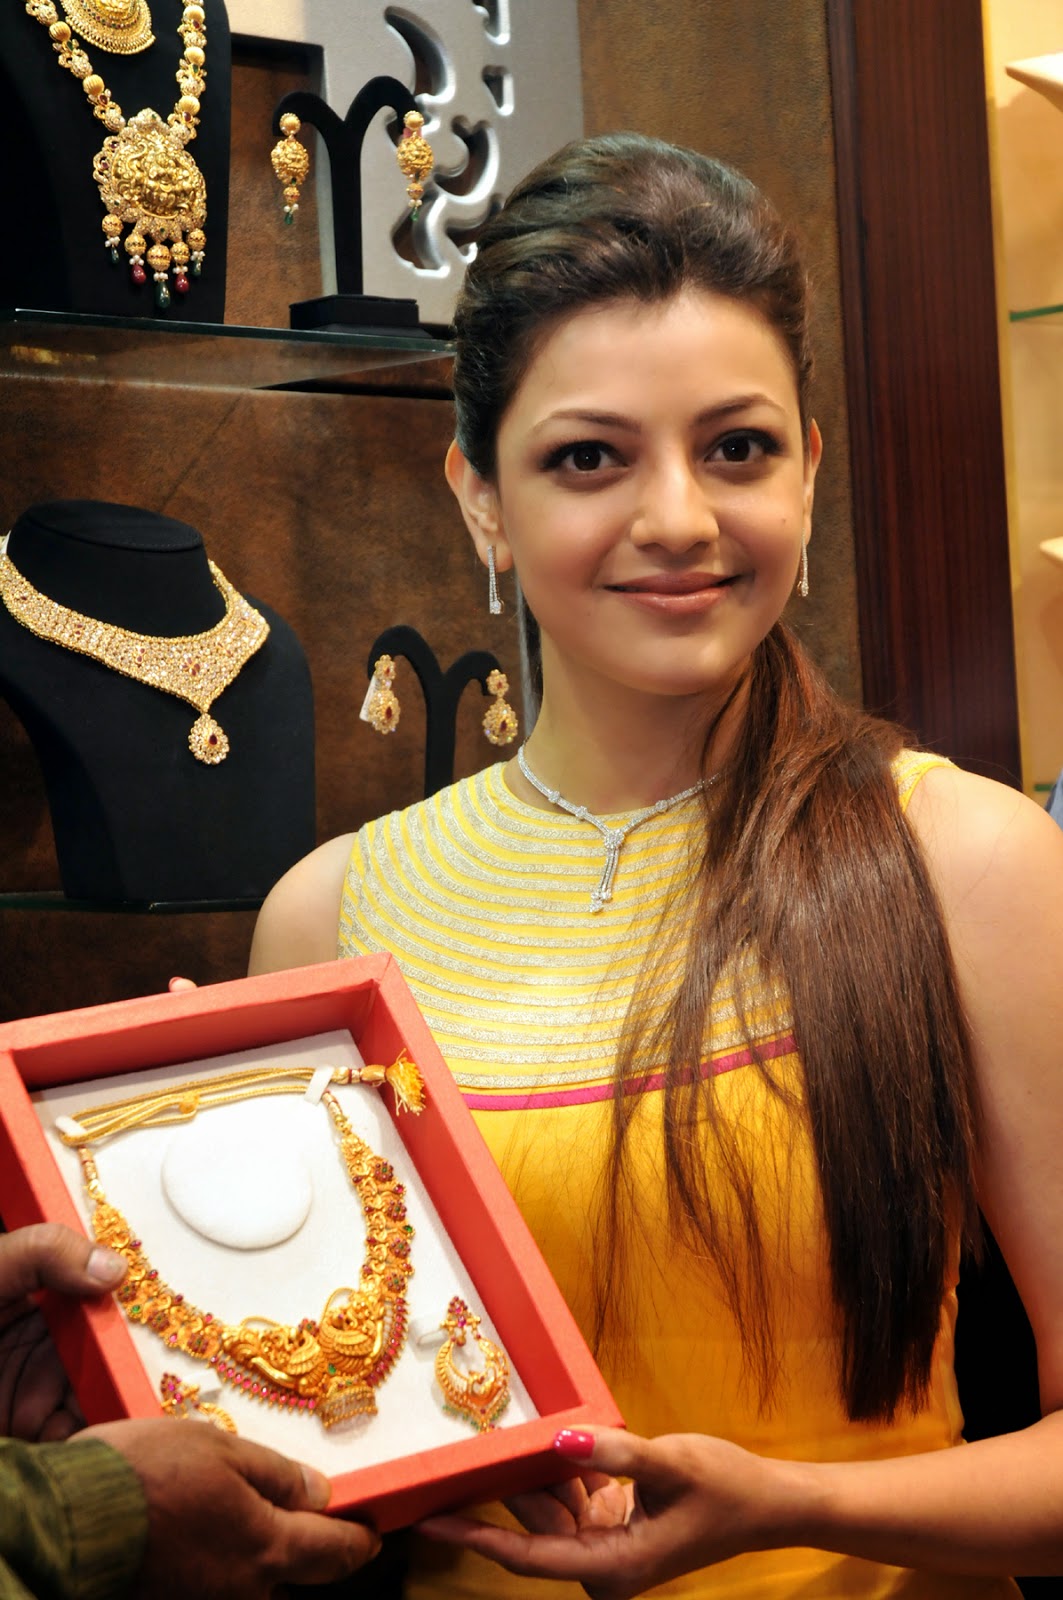 Fine Gold Polish Jewellery at Rs 1350/piece(s), Fine Gold Polish Jewellery  in Chandigarh